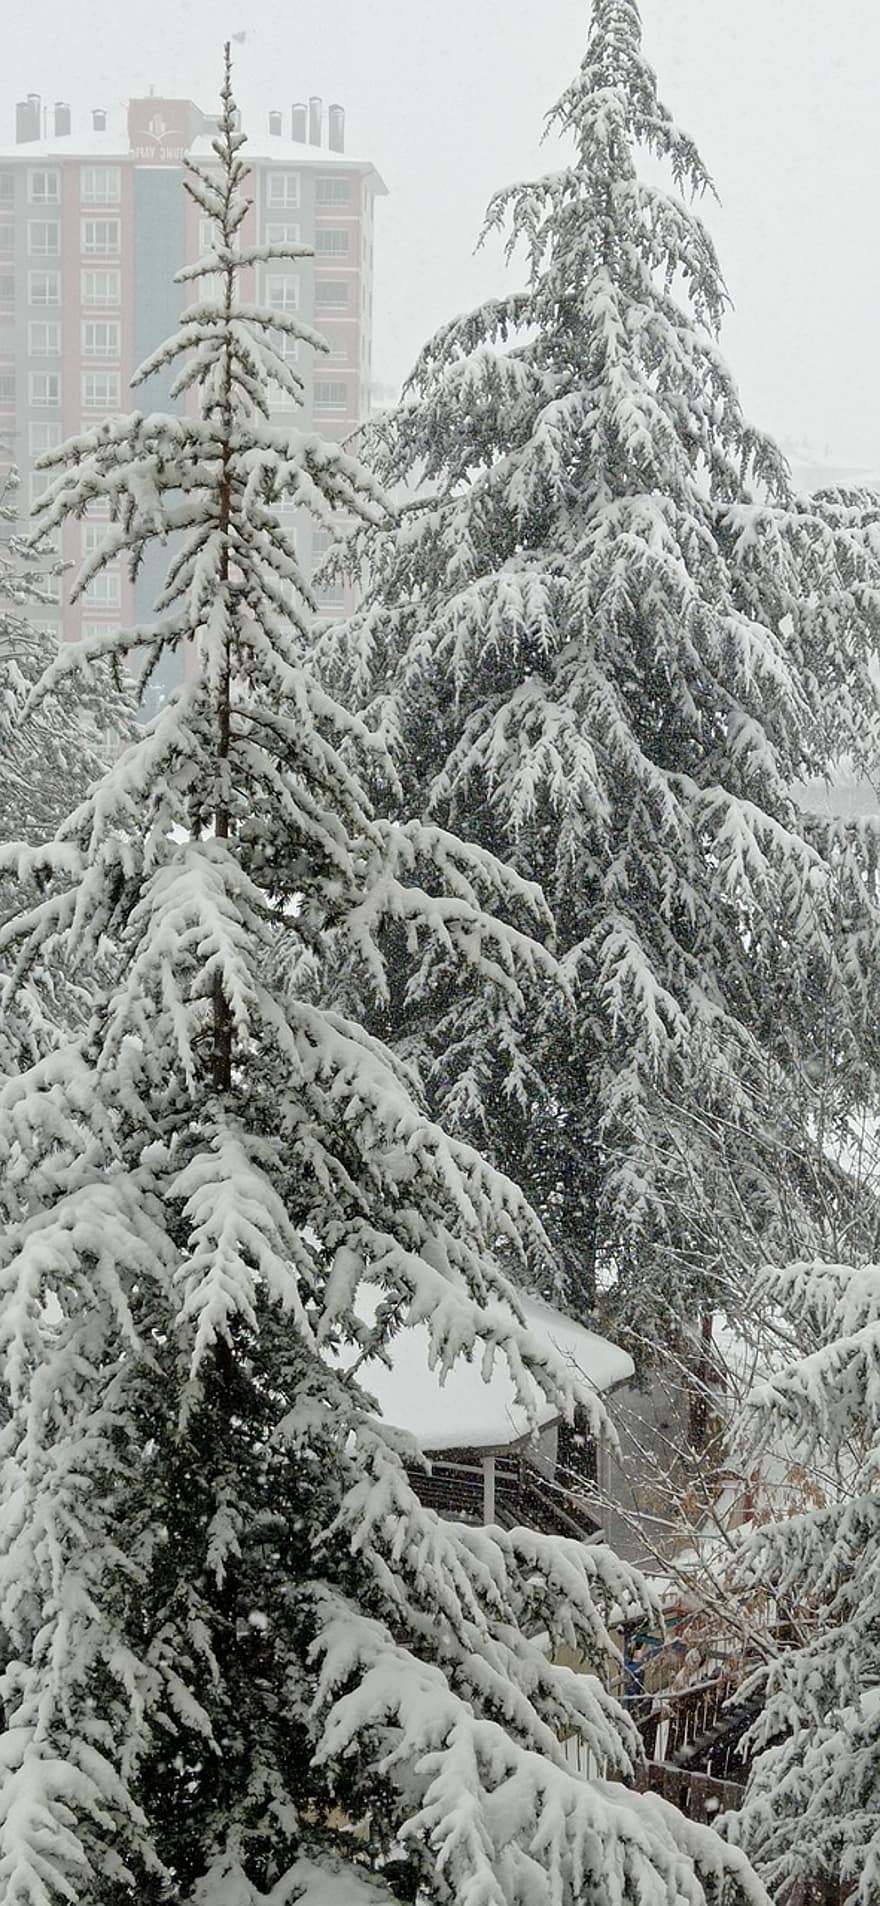 дърво, сняг, зима, гора, бор, скреж, сезон, иглолистни дървета, вали сняг, студена температура, метеорологично време